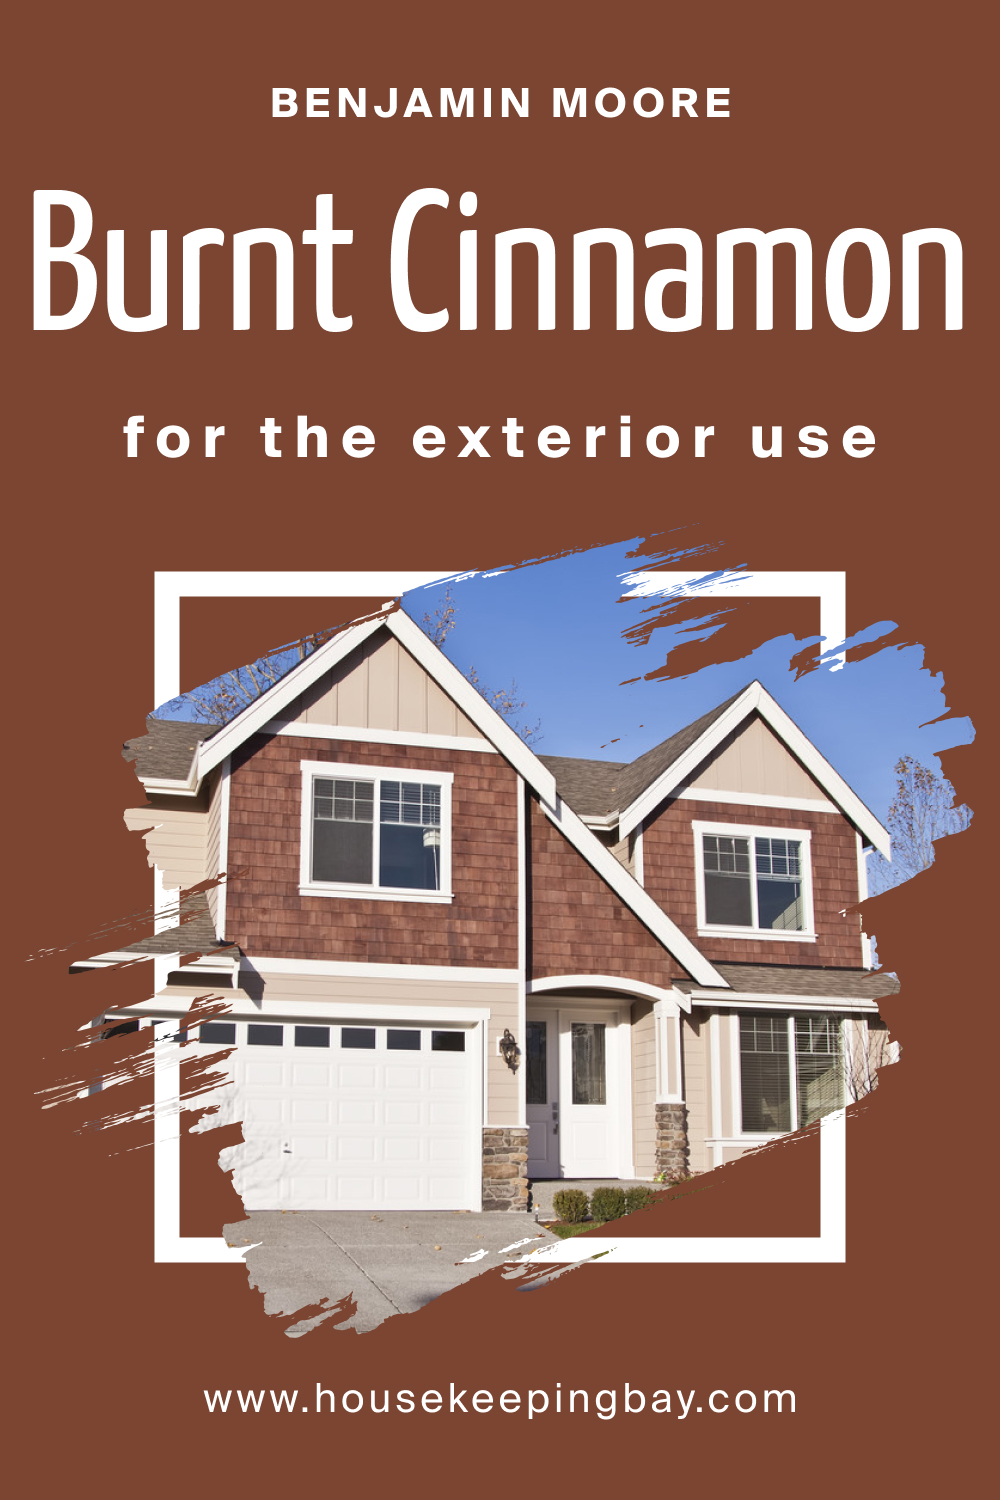 How to Use BM Burnt Cinnamon 2094-10 for an Exterior?